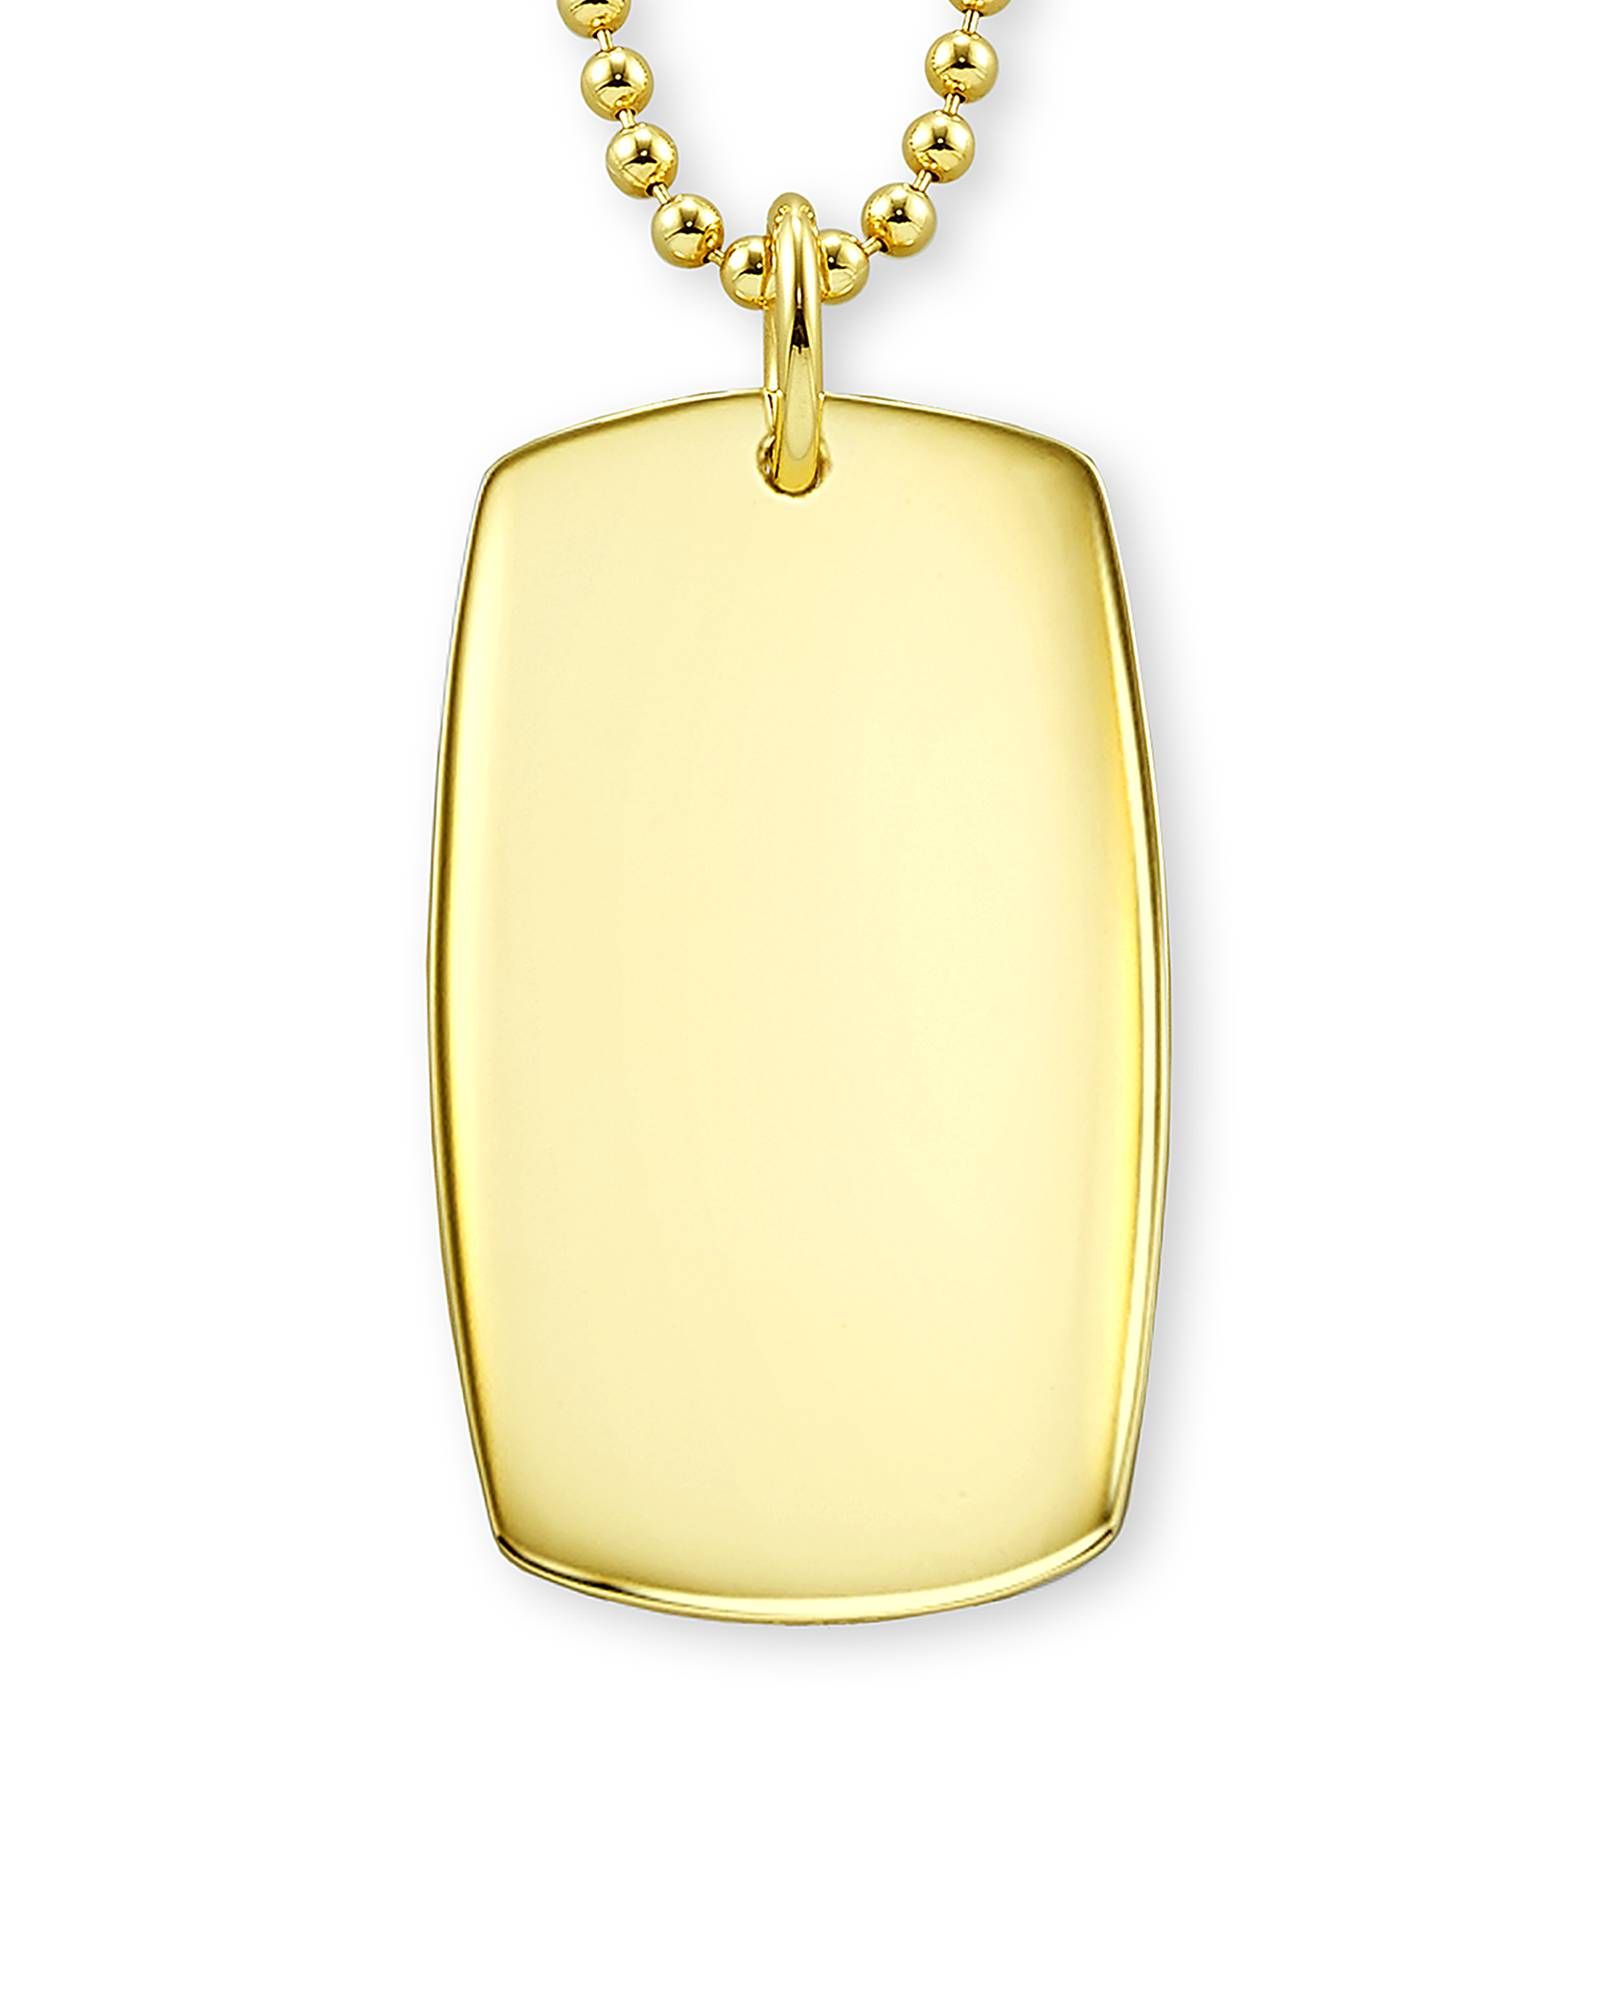 Folds Of Honor Pendant Necklace in 18k Gold Vermeil | Kendra Scott